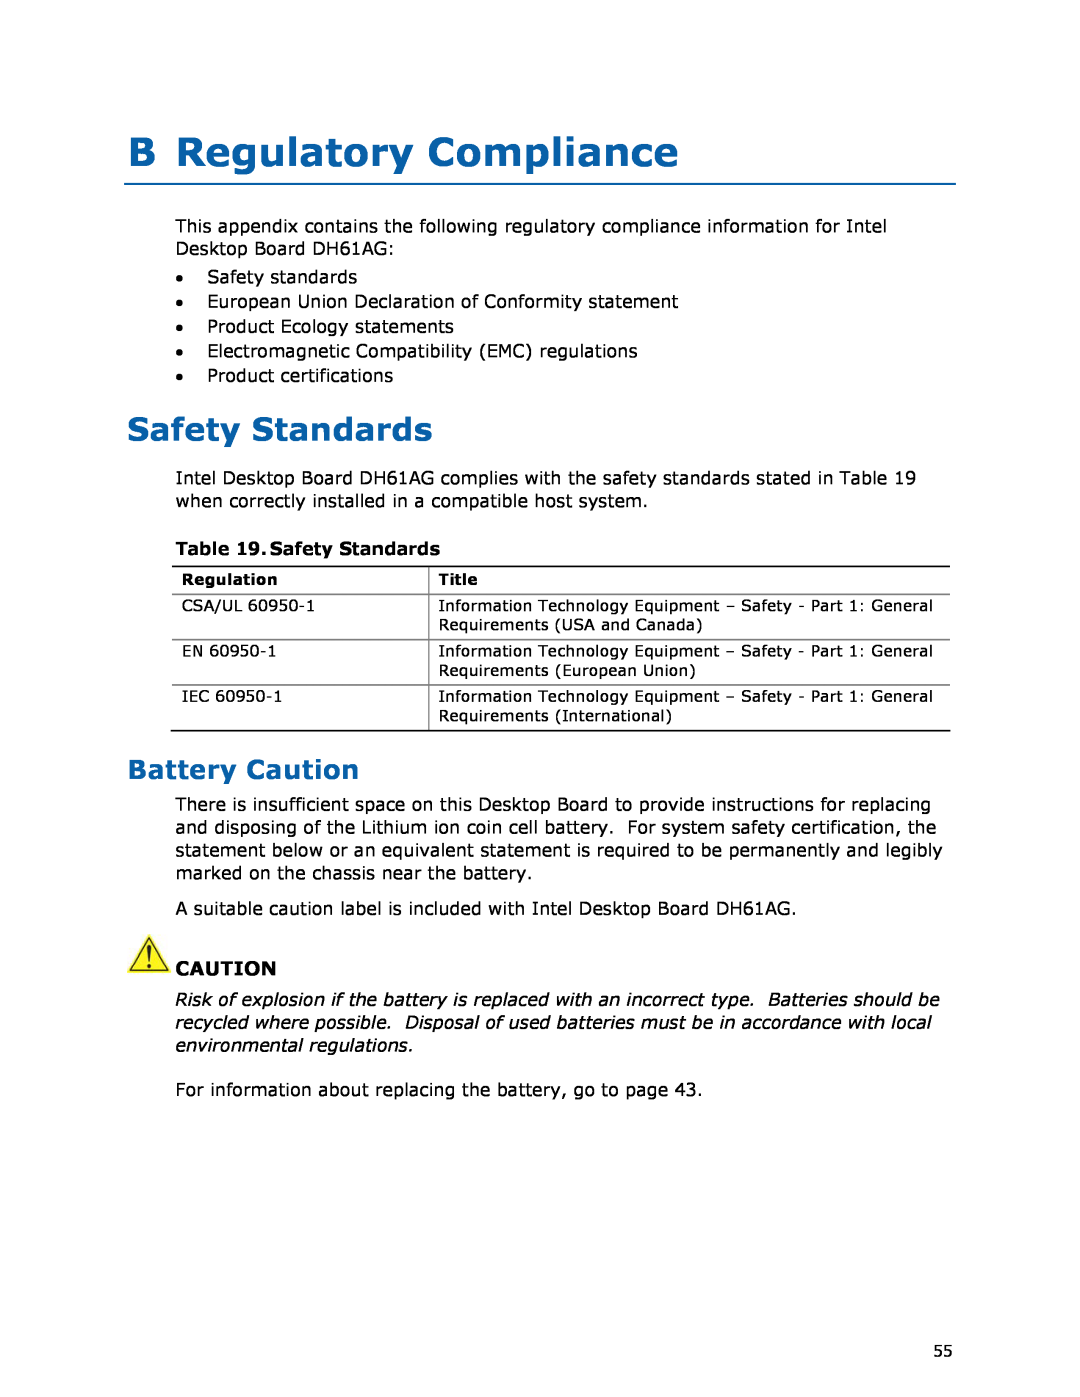 Intel BOXDH61AG manual B Regulatory Compliance, Safety Standards, Battery Caution 